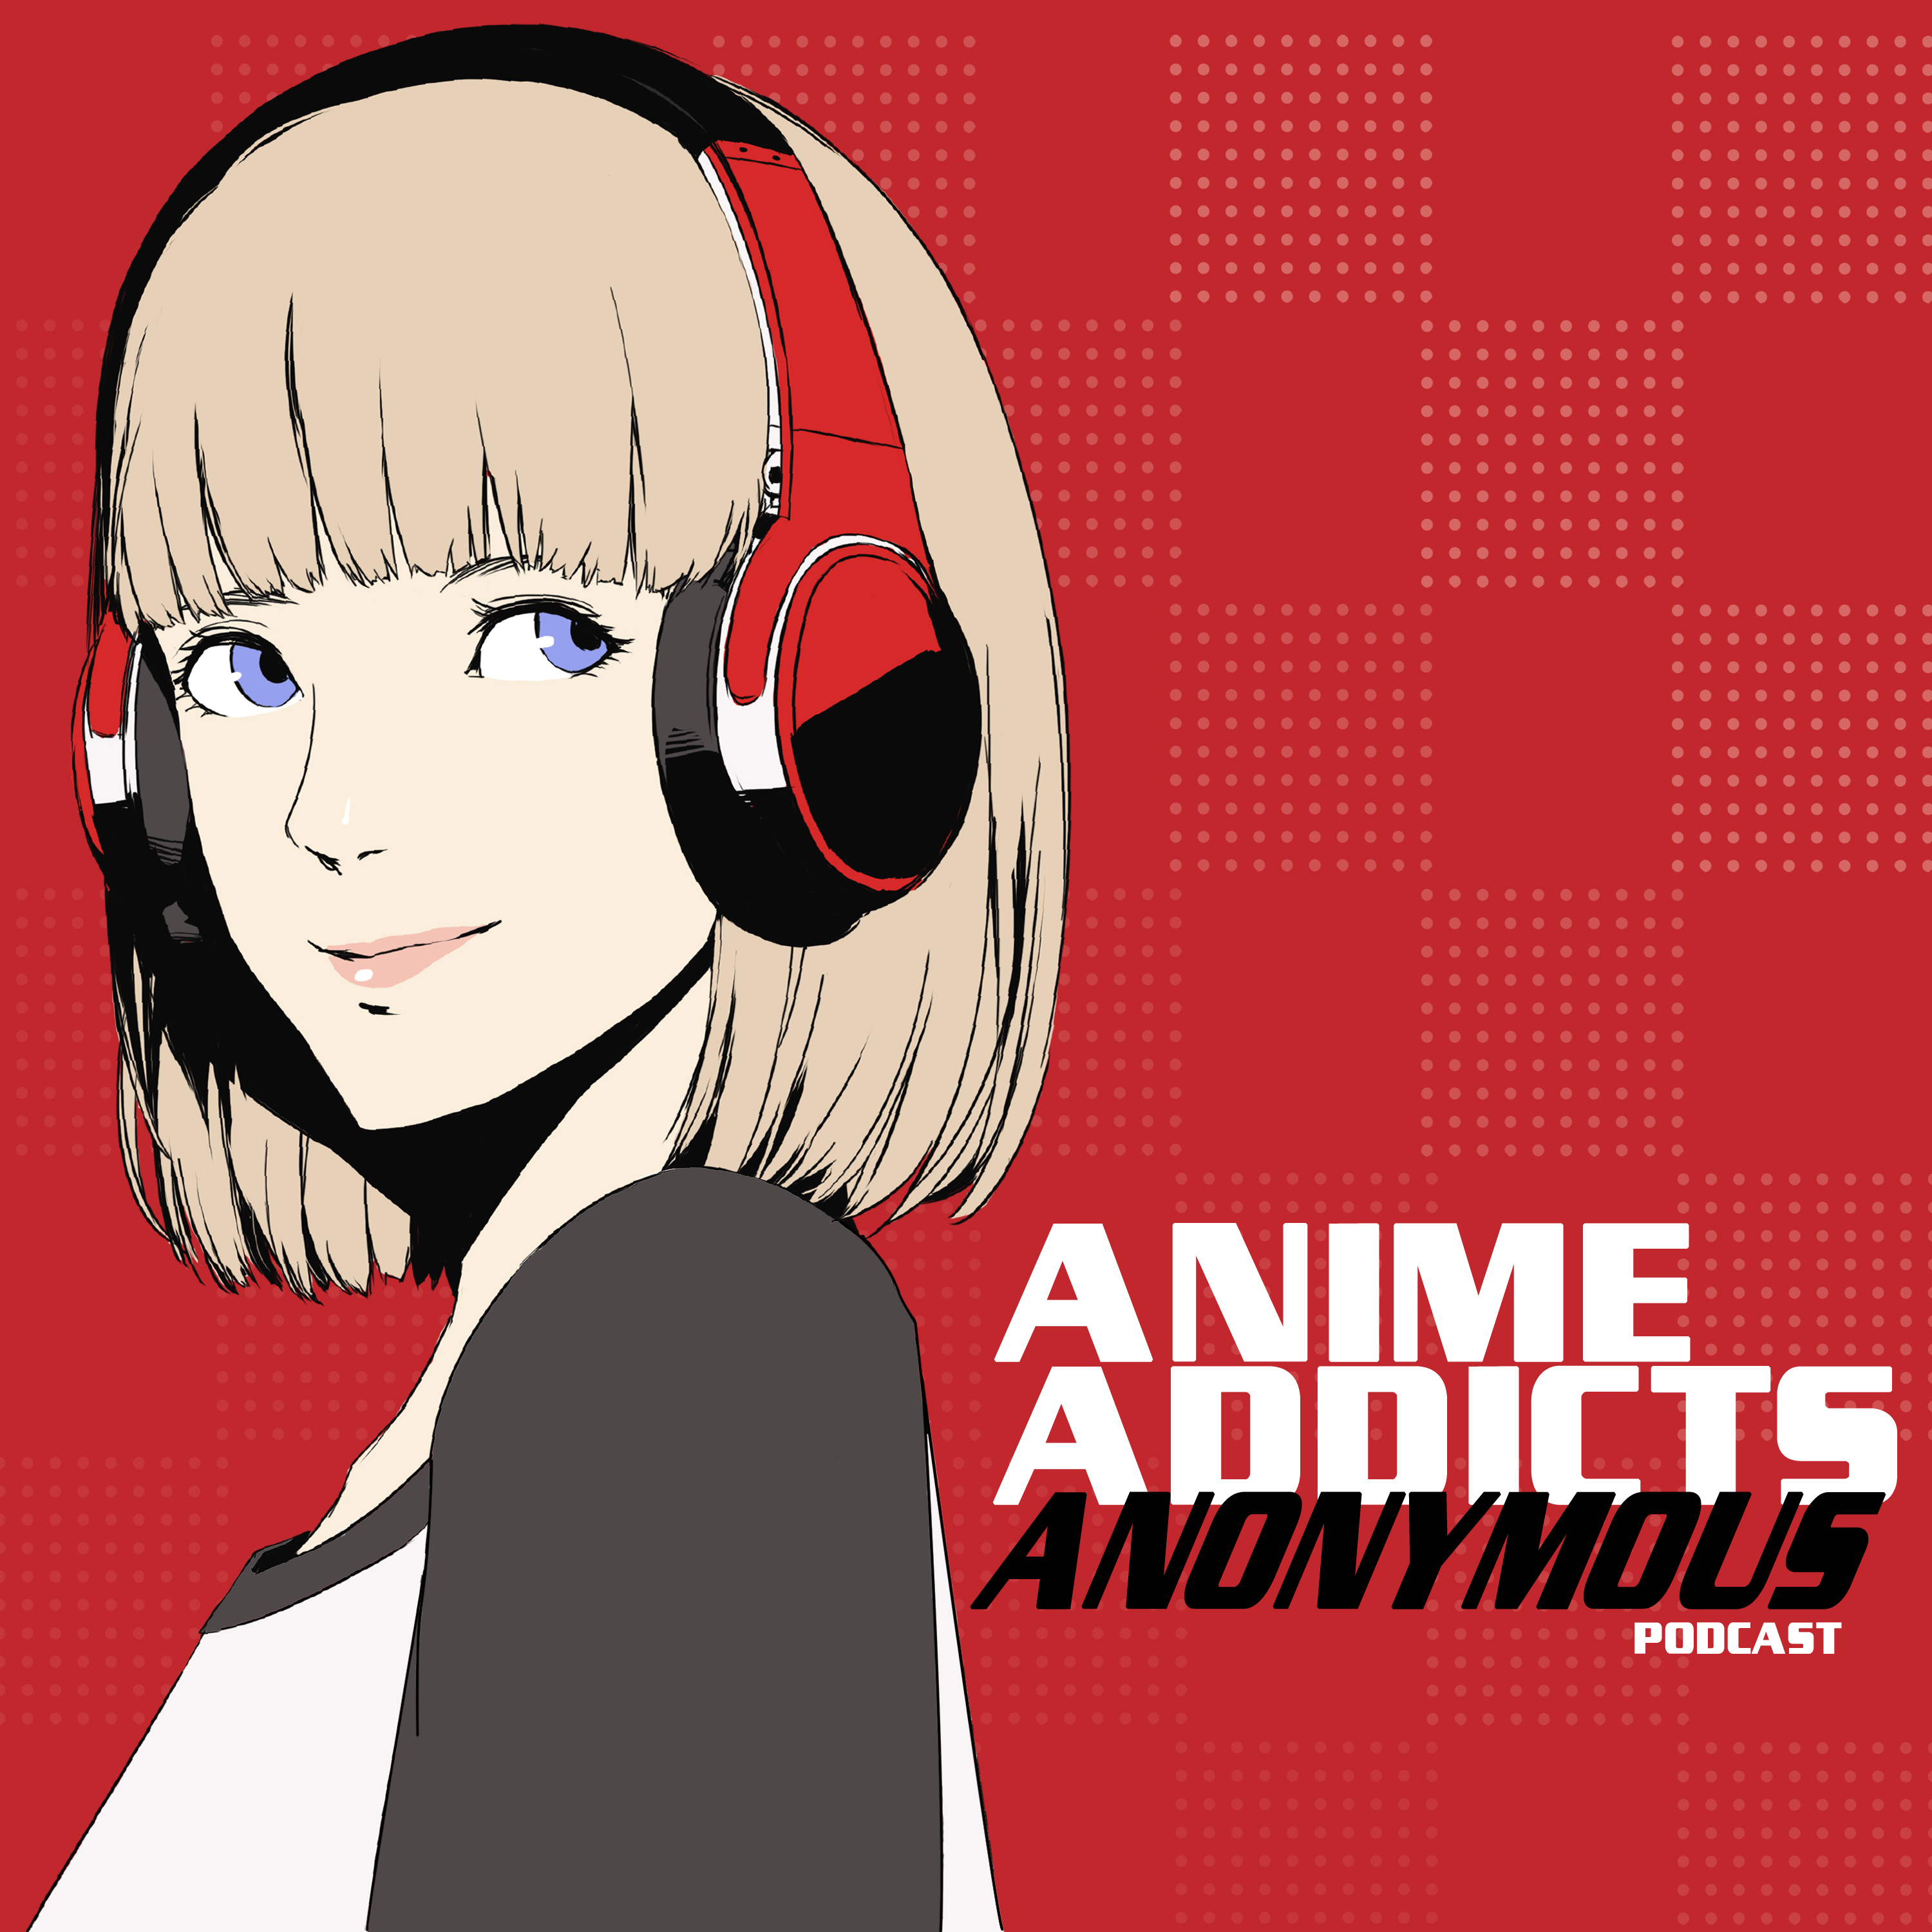 Listen to AnimeSphere podcast